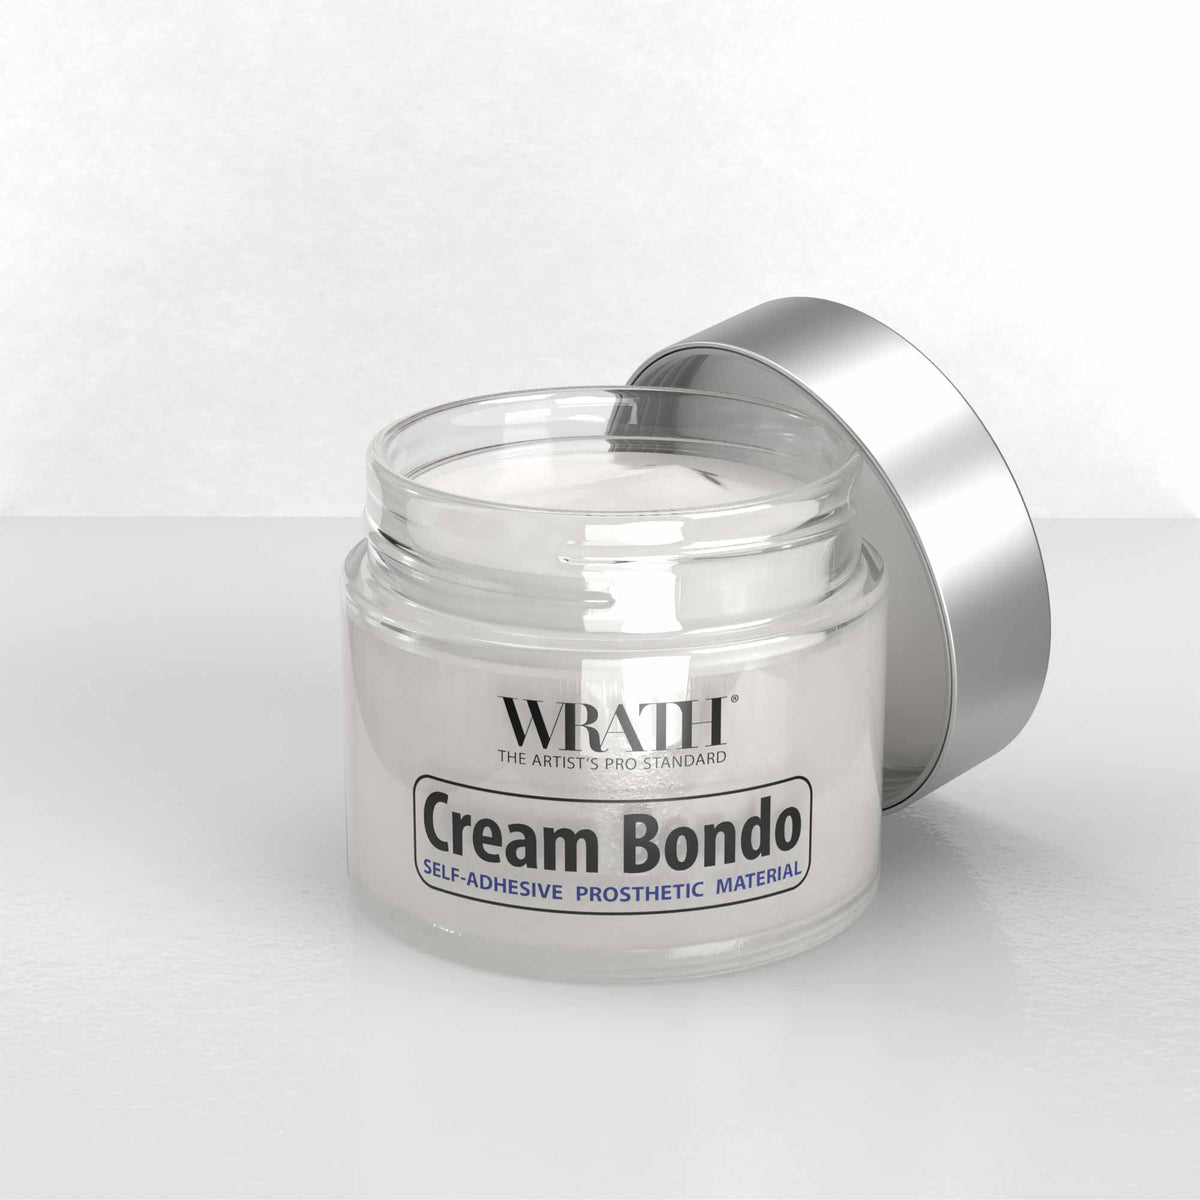 WRATH Cream Bondo - Clear Prosthetic Material